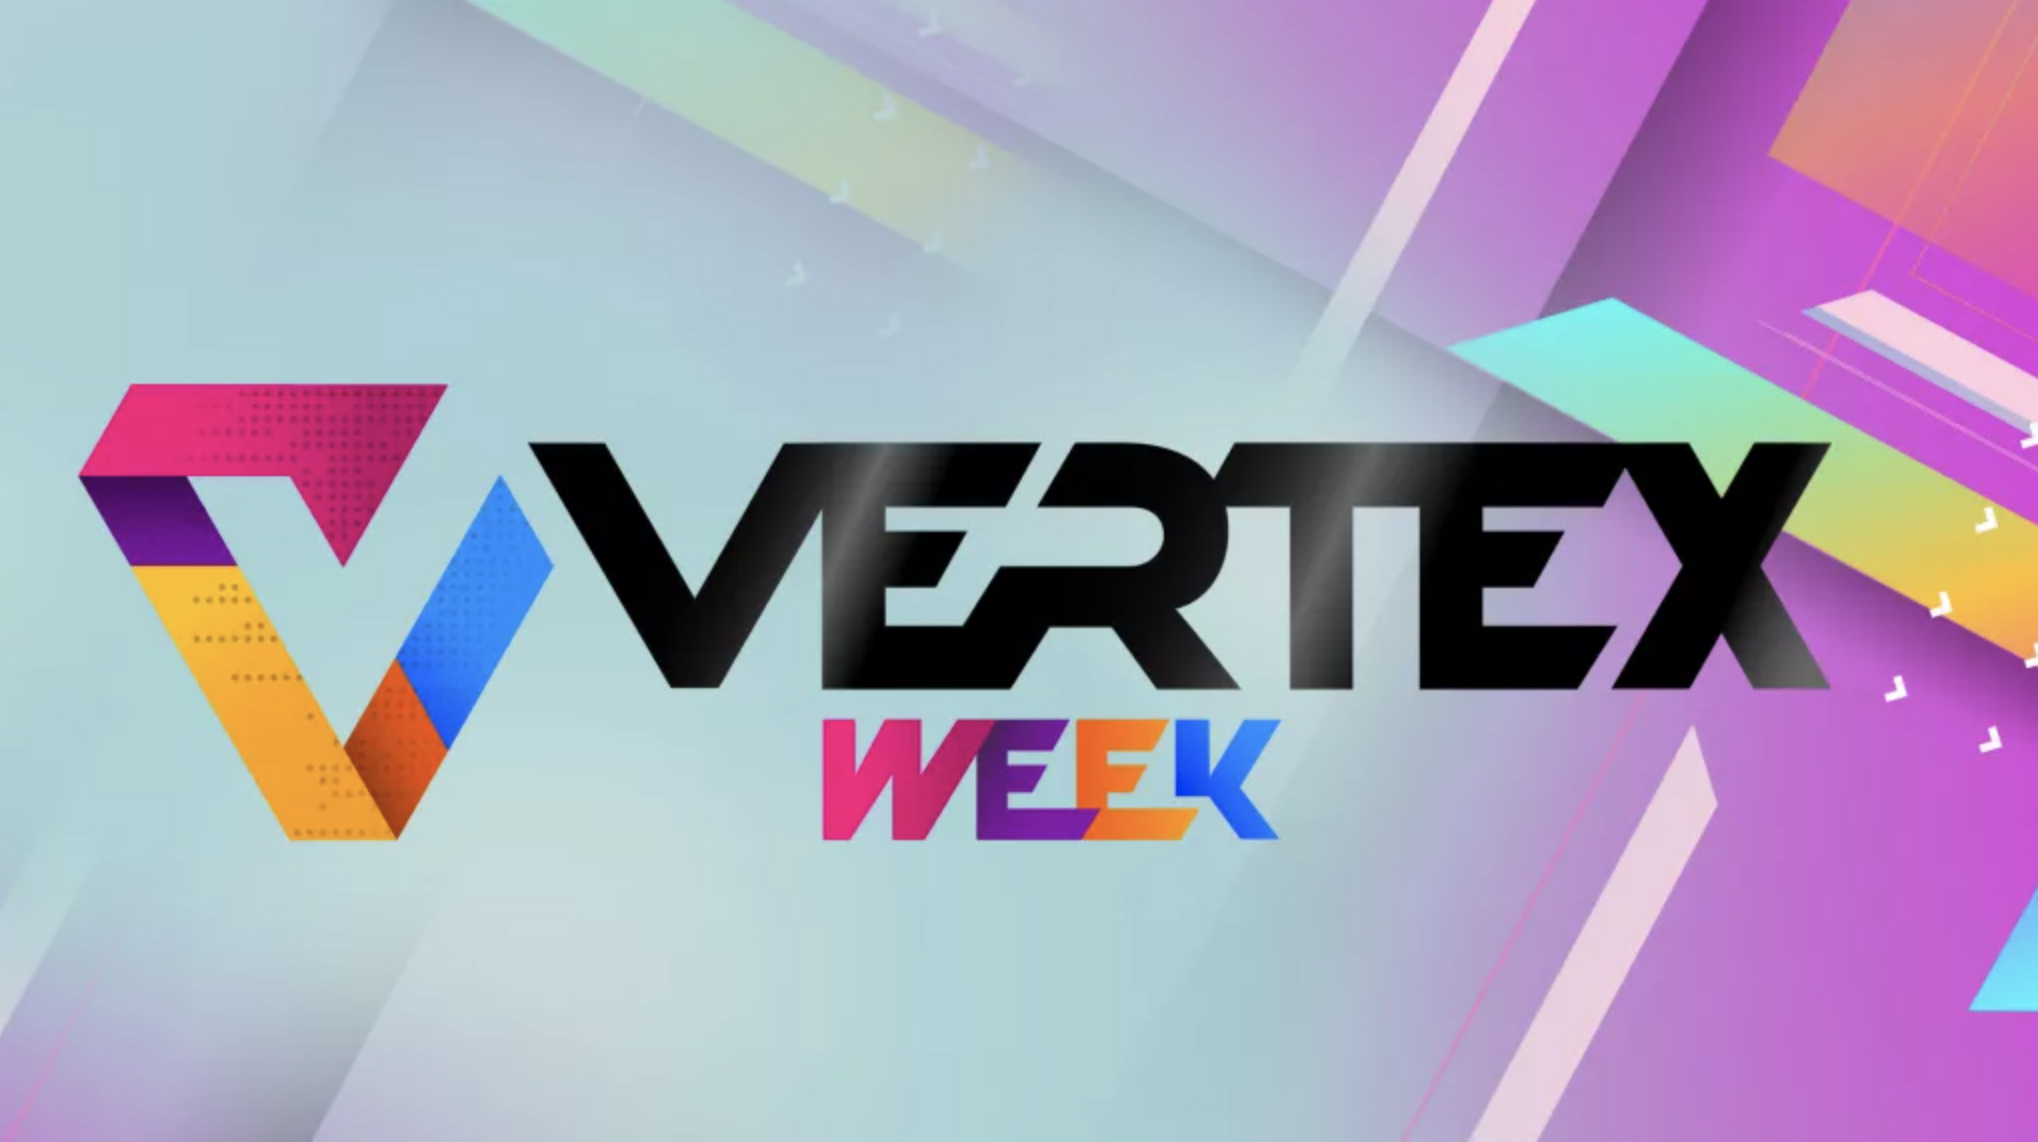 Vertex Week logo